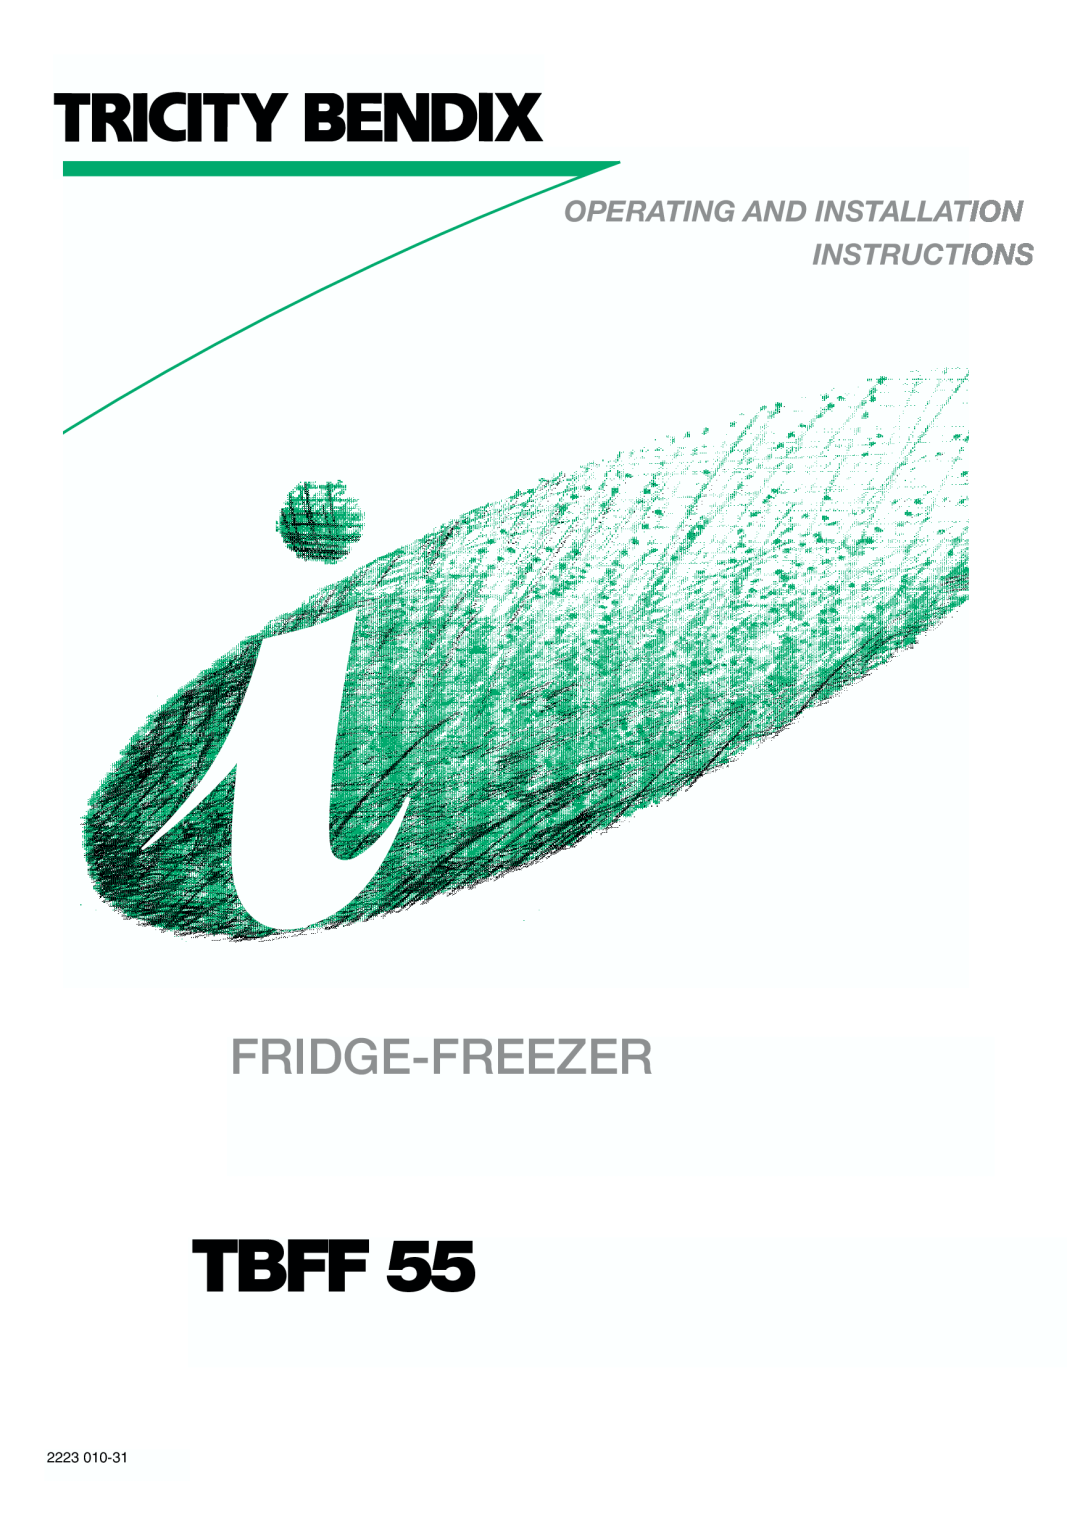 Tricity Bendix TBFF 55 installation instructions Tbff, Fridge-Freezer, Operating And Installation Instructions, 2223 